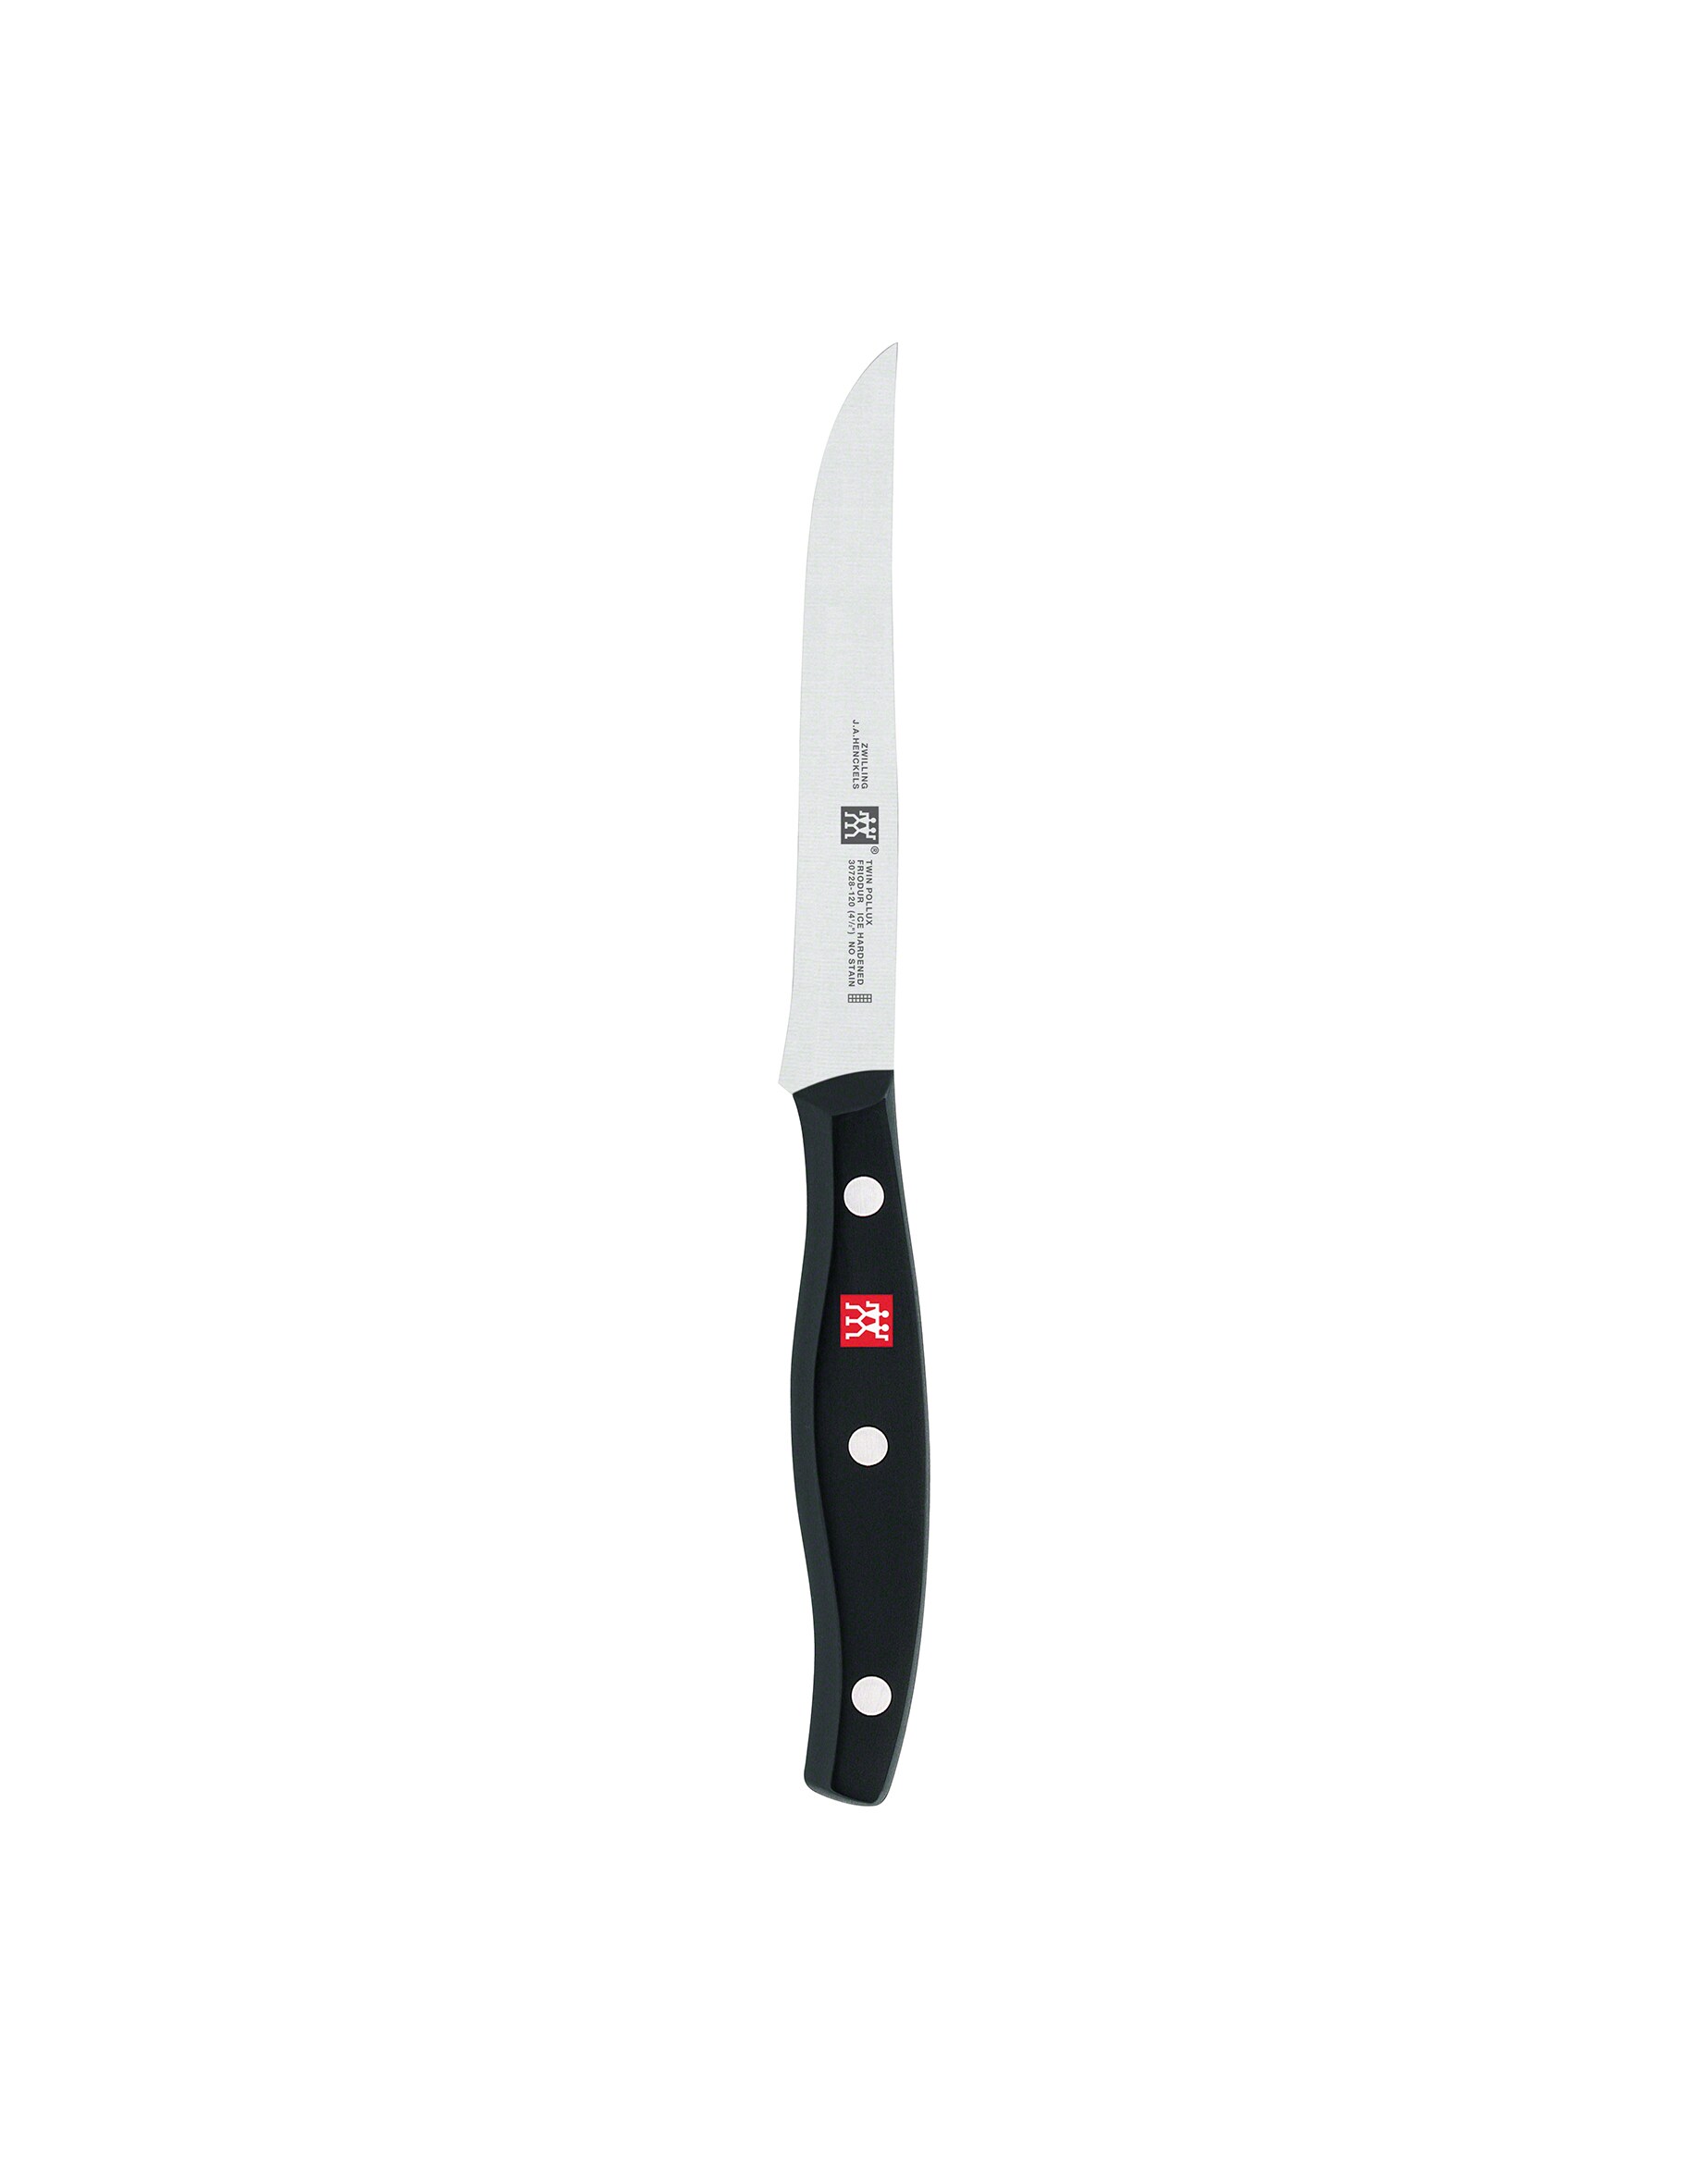 Набор ножей для стейка 6 шт TWIN 120 мм Zwilling набор ножей для стейка tarrerias bonjean лайоль эволюция ручка абс пластик 6 шт